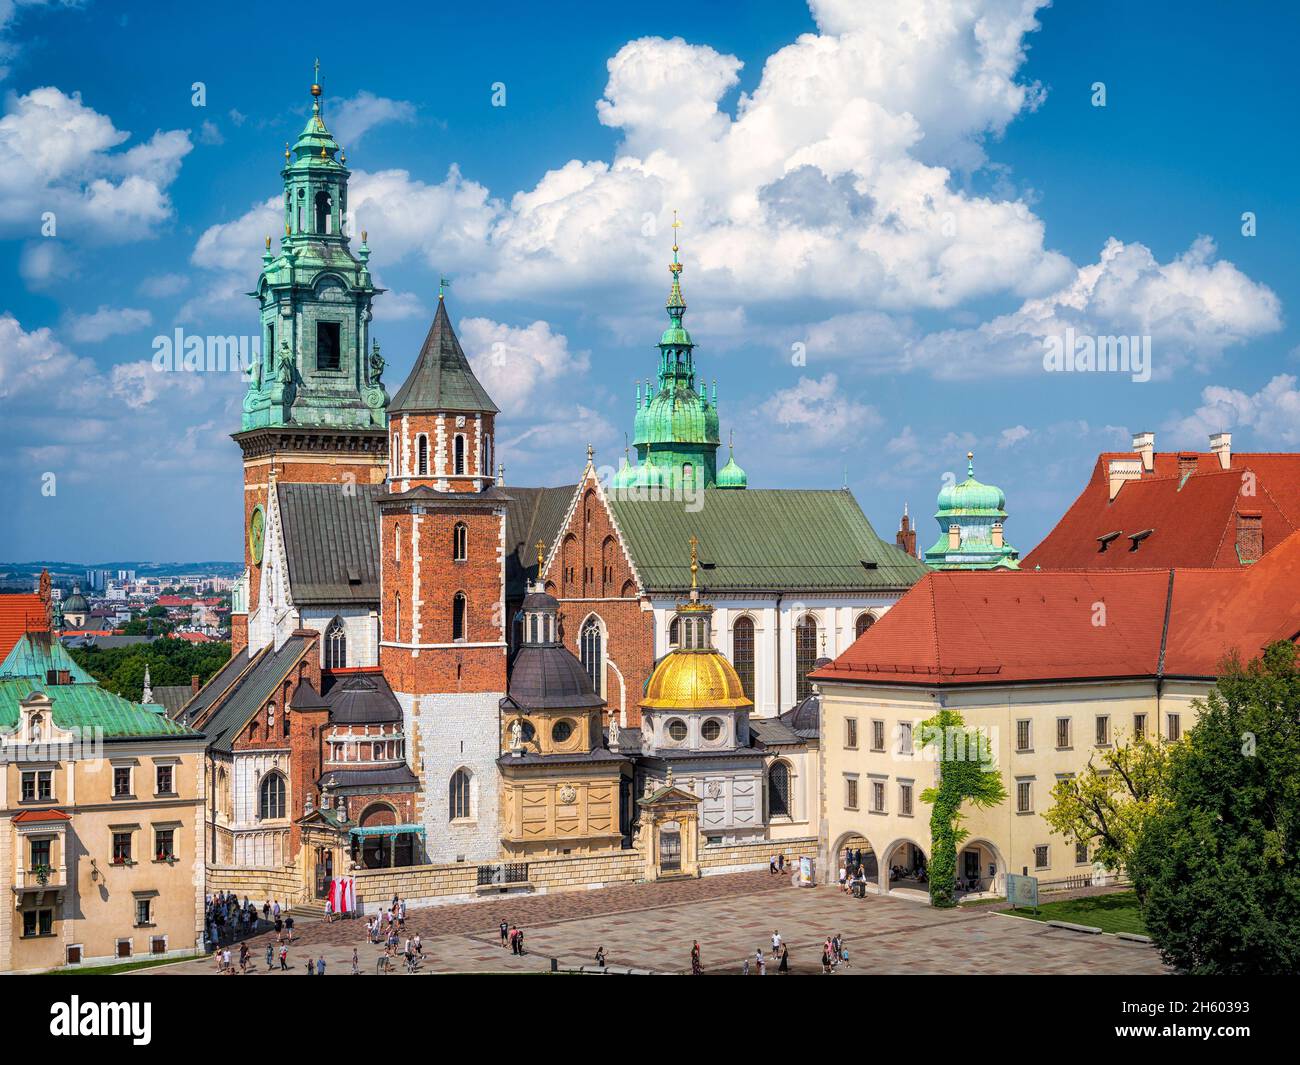 Wawel castle in Krakow, Poland on a sunny day Stock Photo